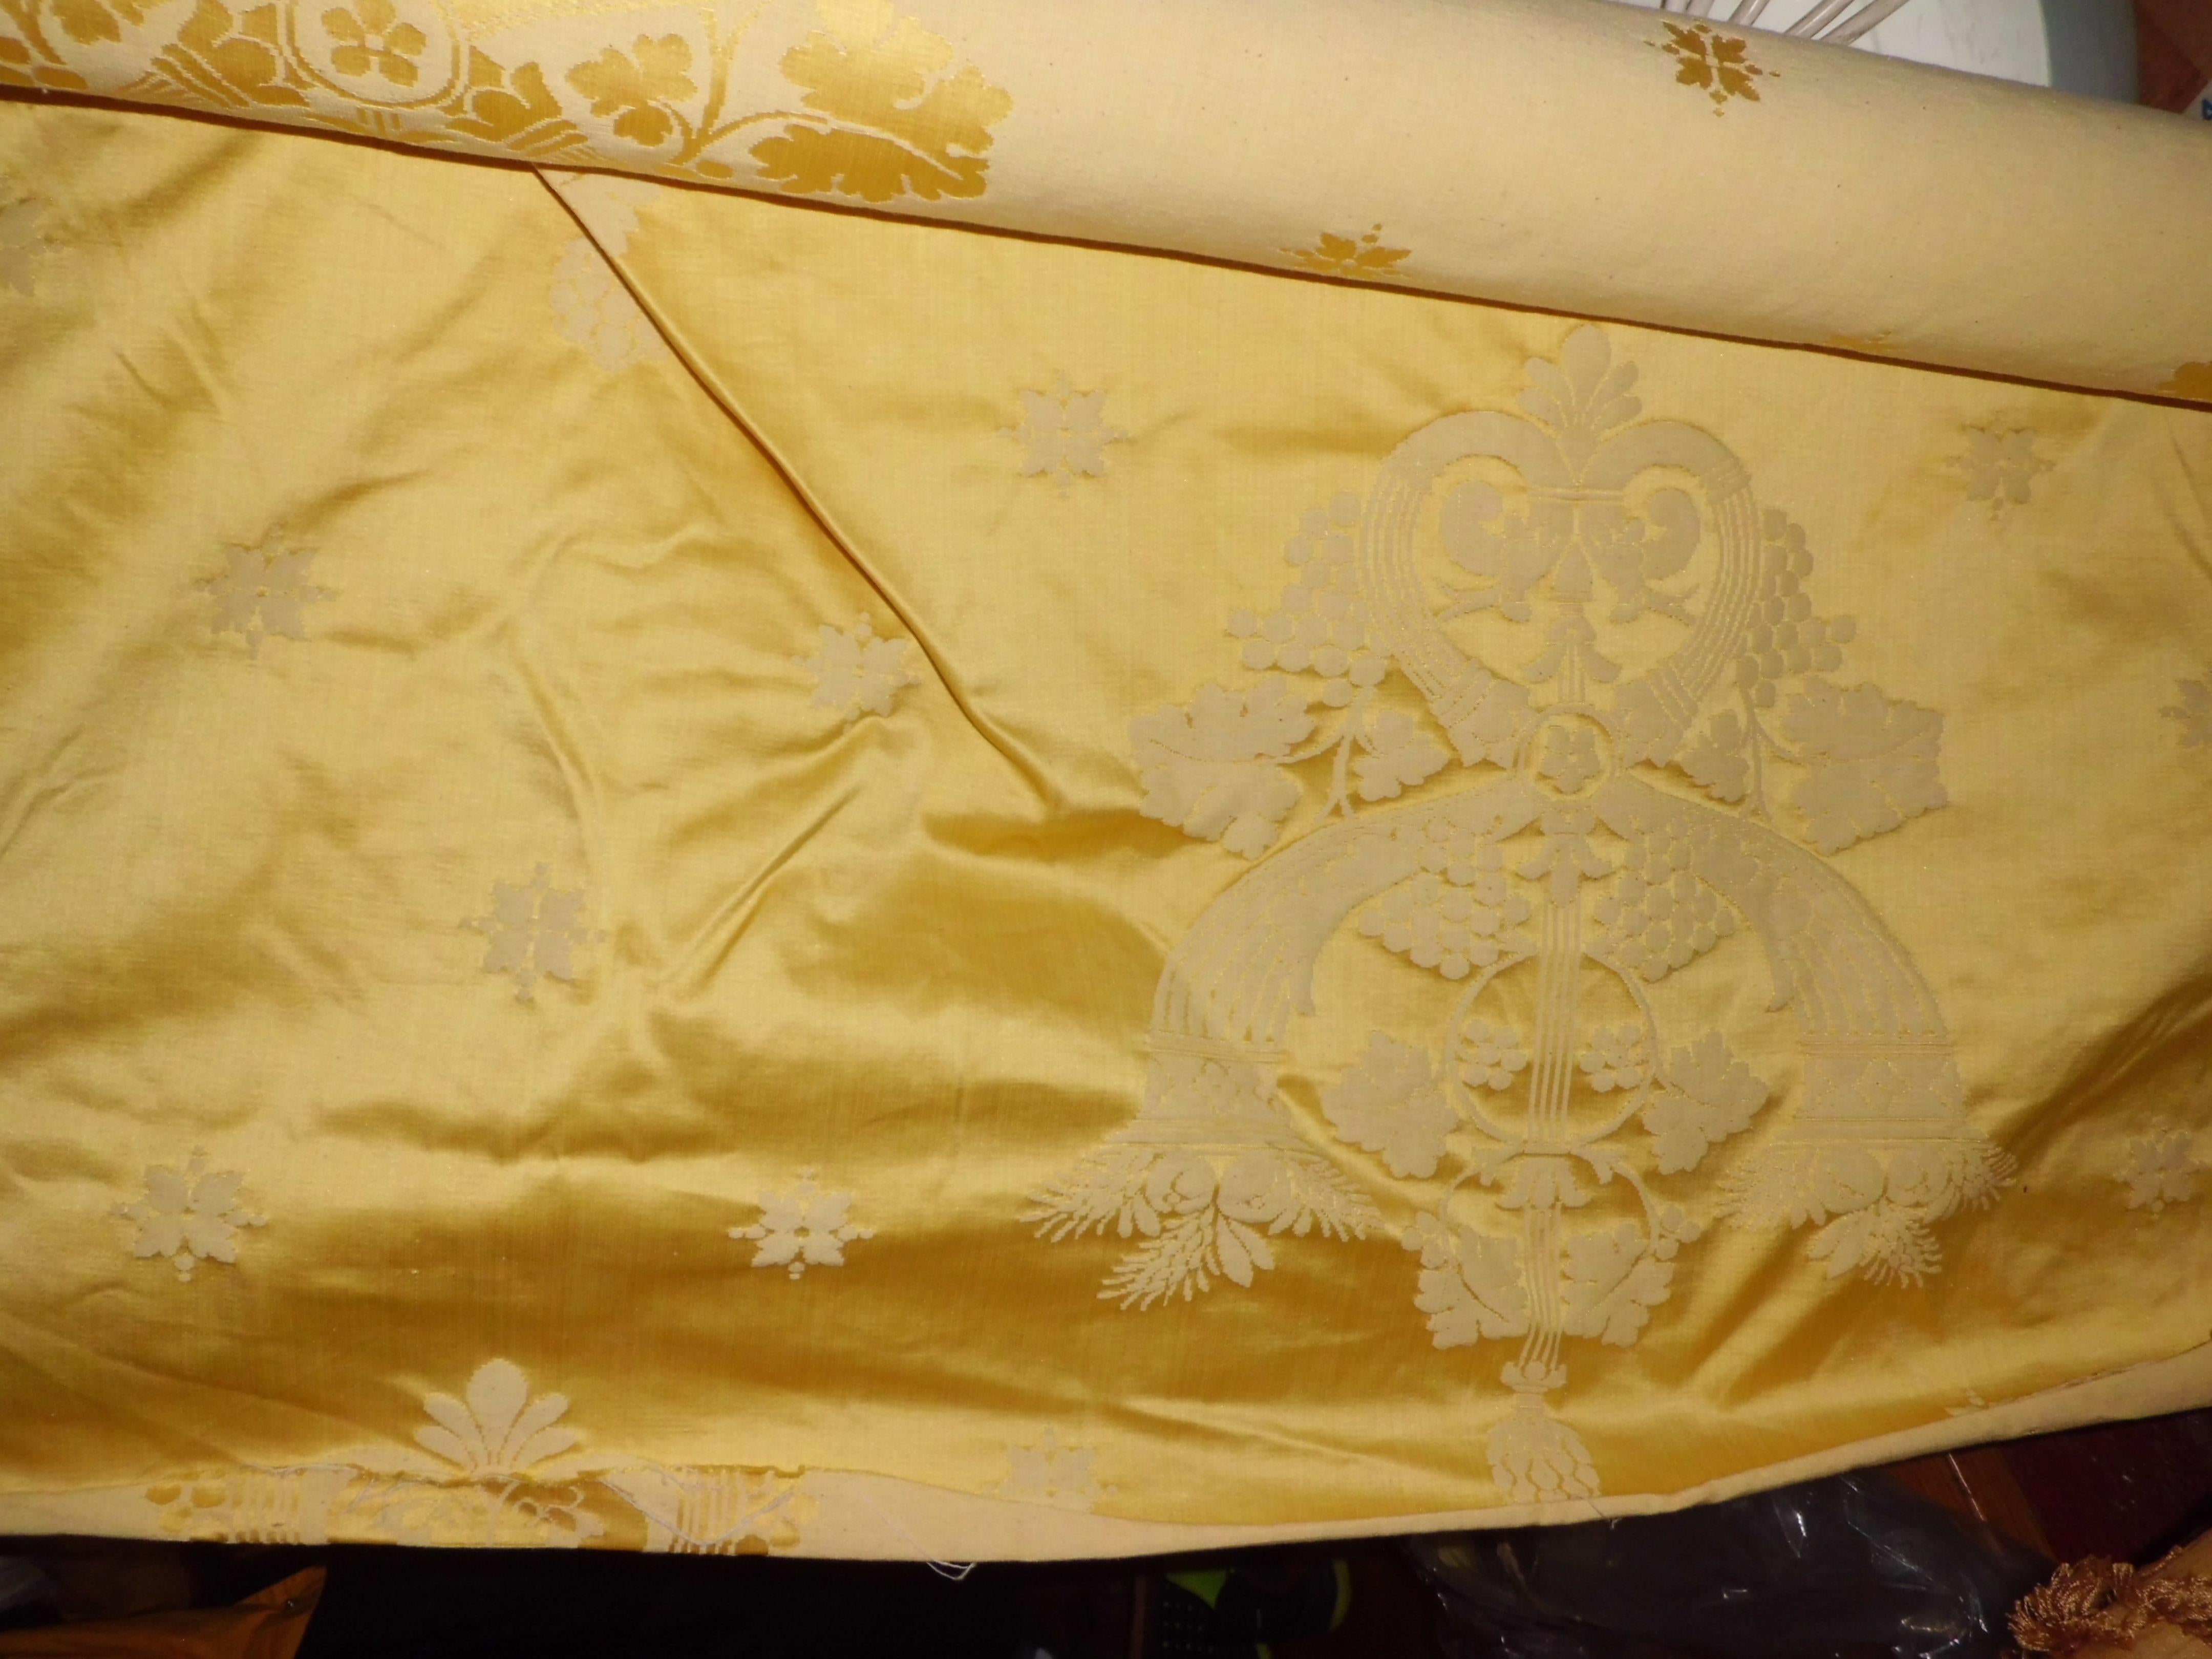 Luigi Bevilaqua Venezia, mt 3,30 silk, limited edition
Measures: Height 130 cm
golden yellow damask.